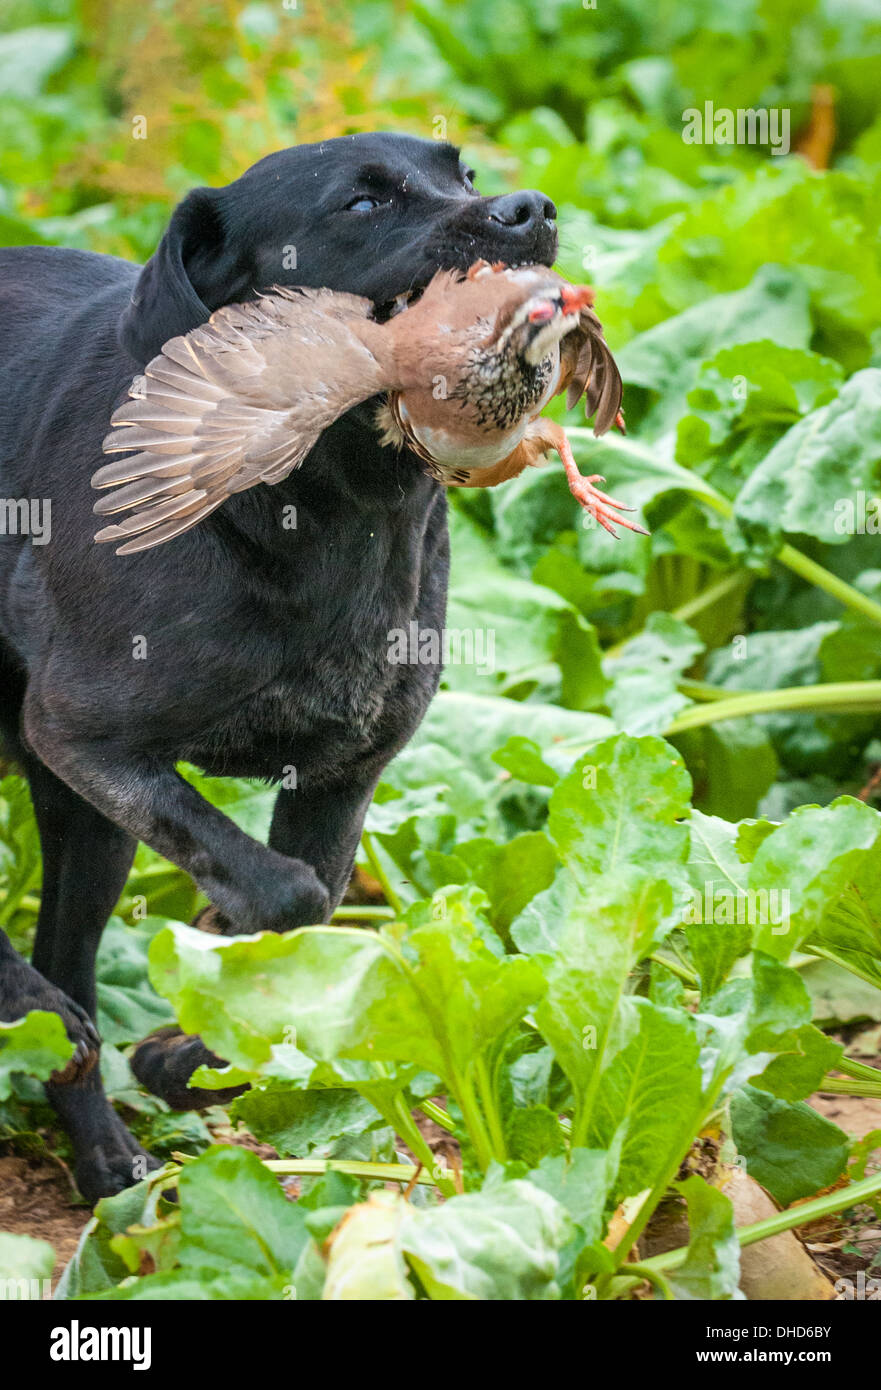 A gun dog, black labrador, retrieving a red partridge at a gun dog training day in field of sugar beet Stock Photo